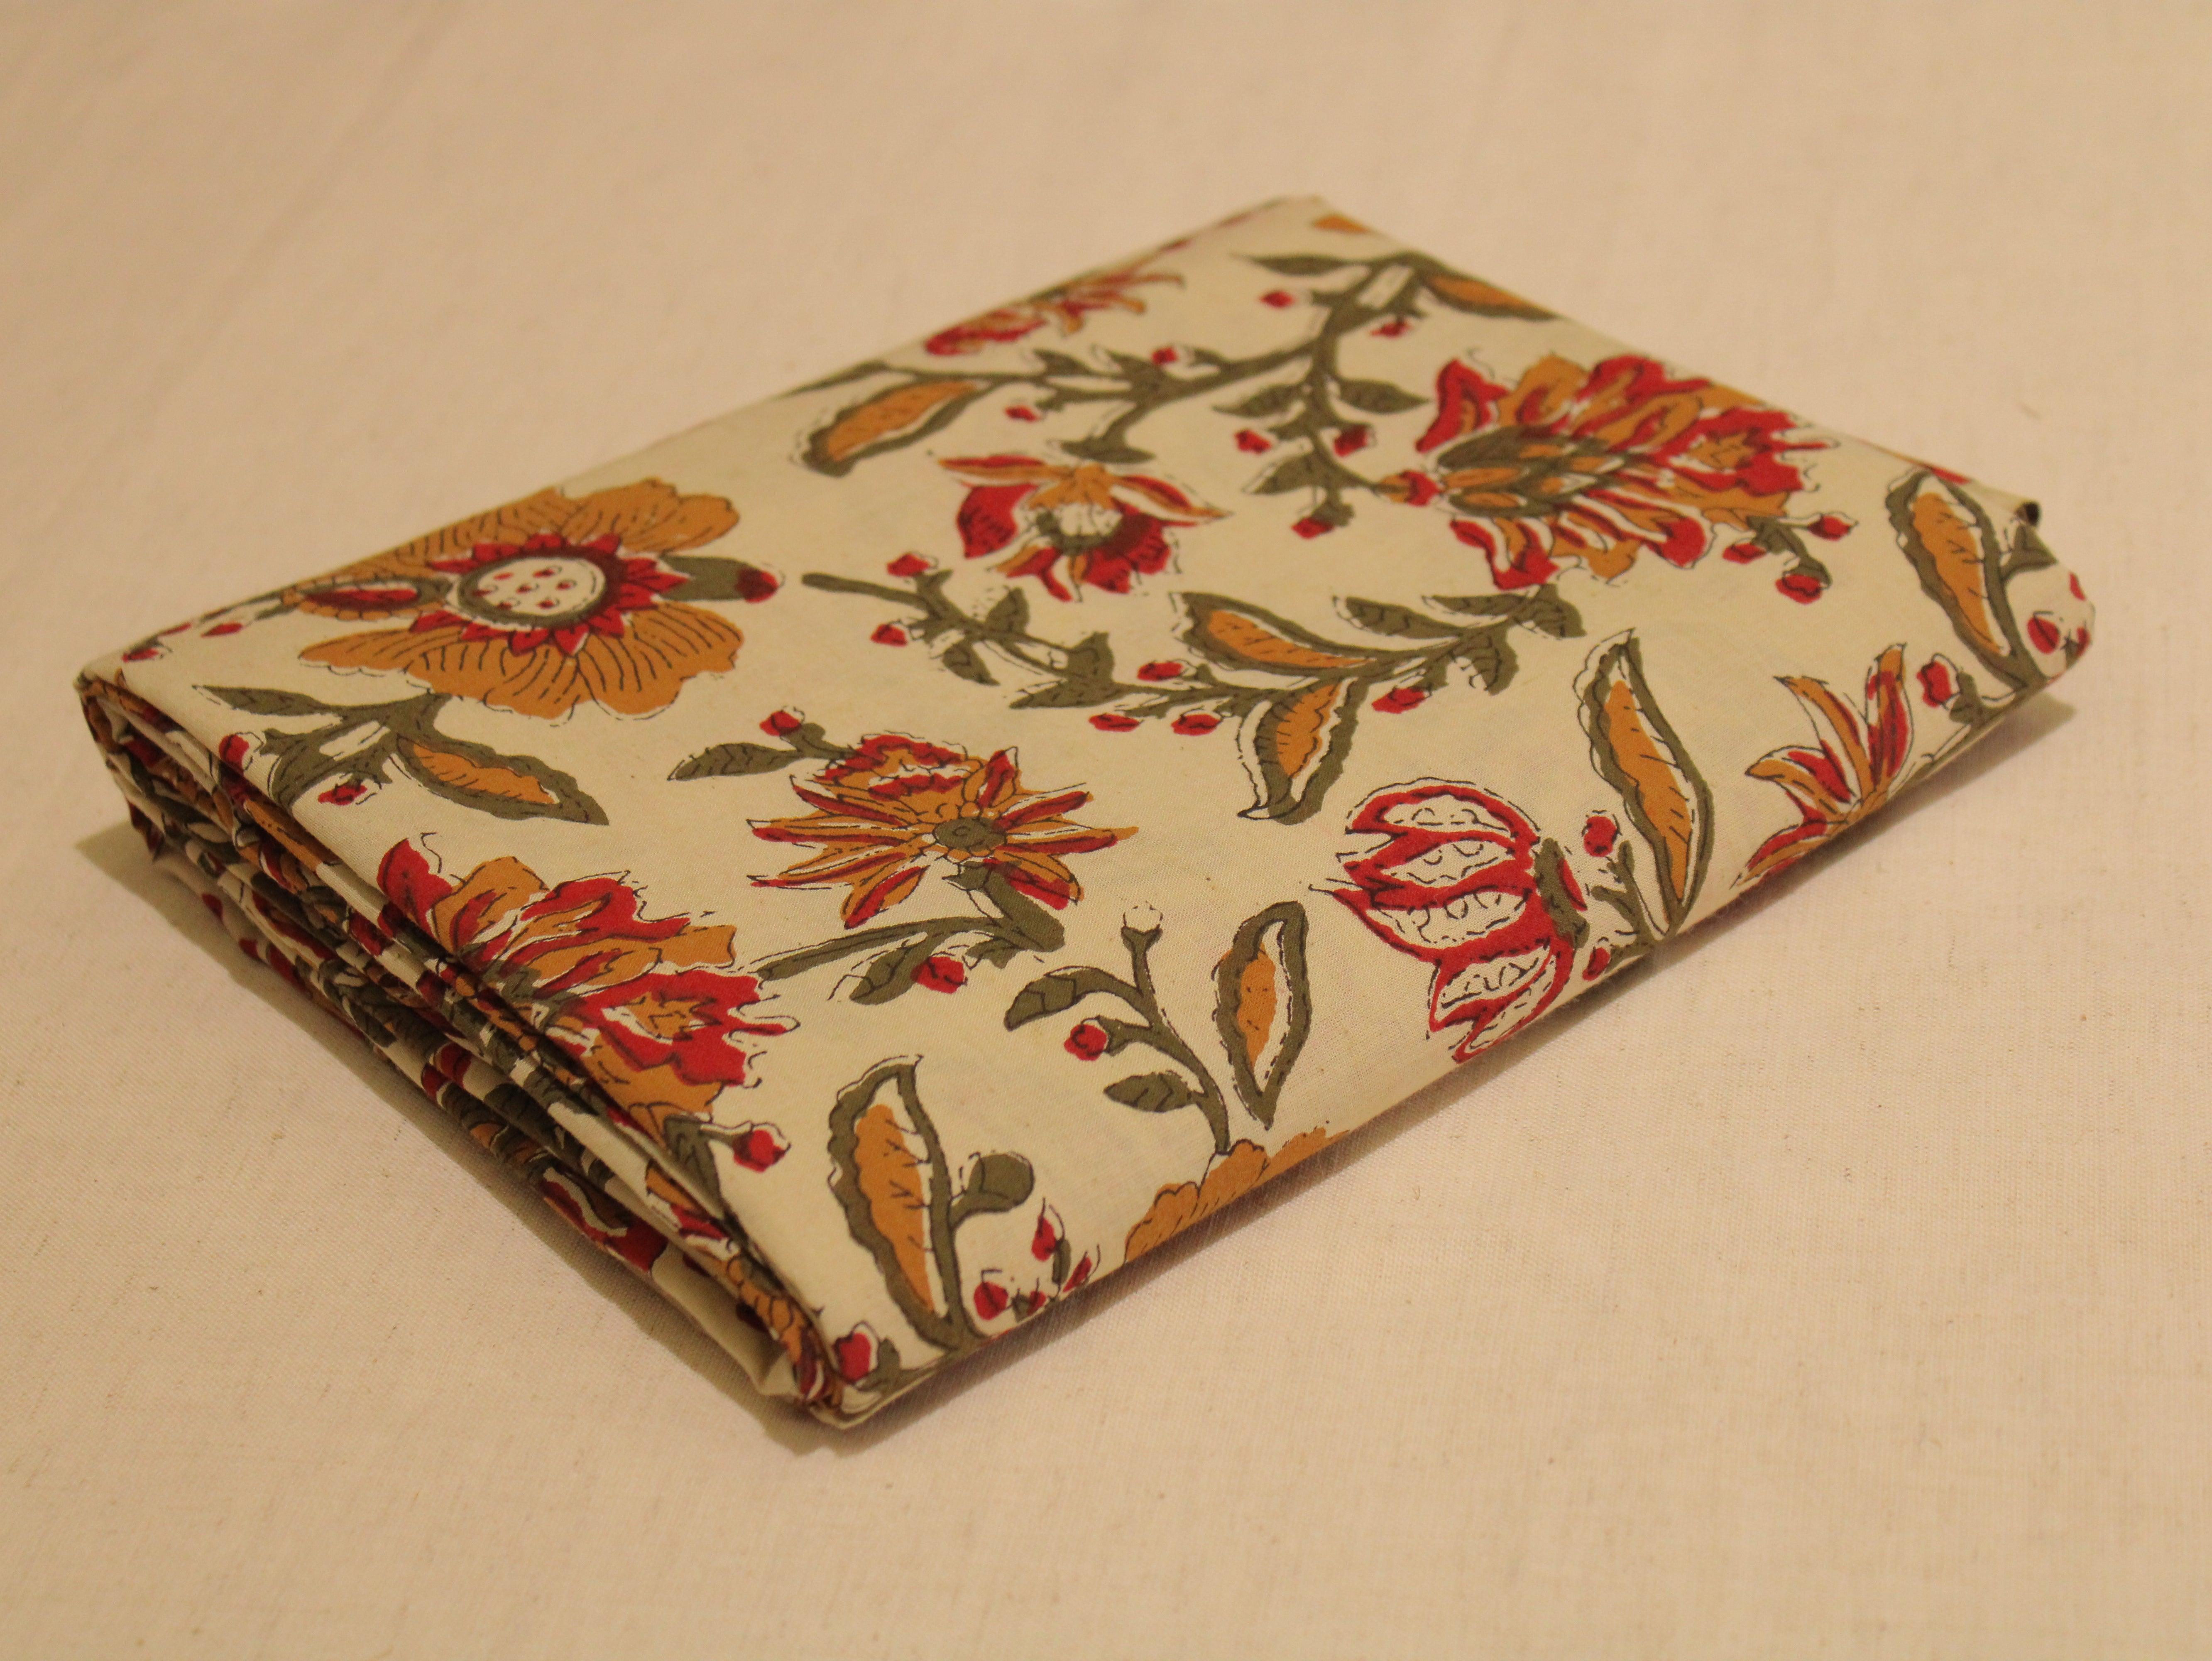 Euphoric - Cotton Hand block Printed Fabric by M'Foks - M'Foks